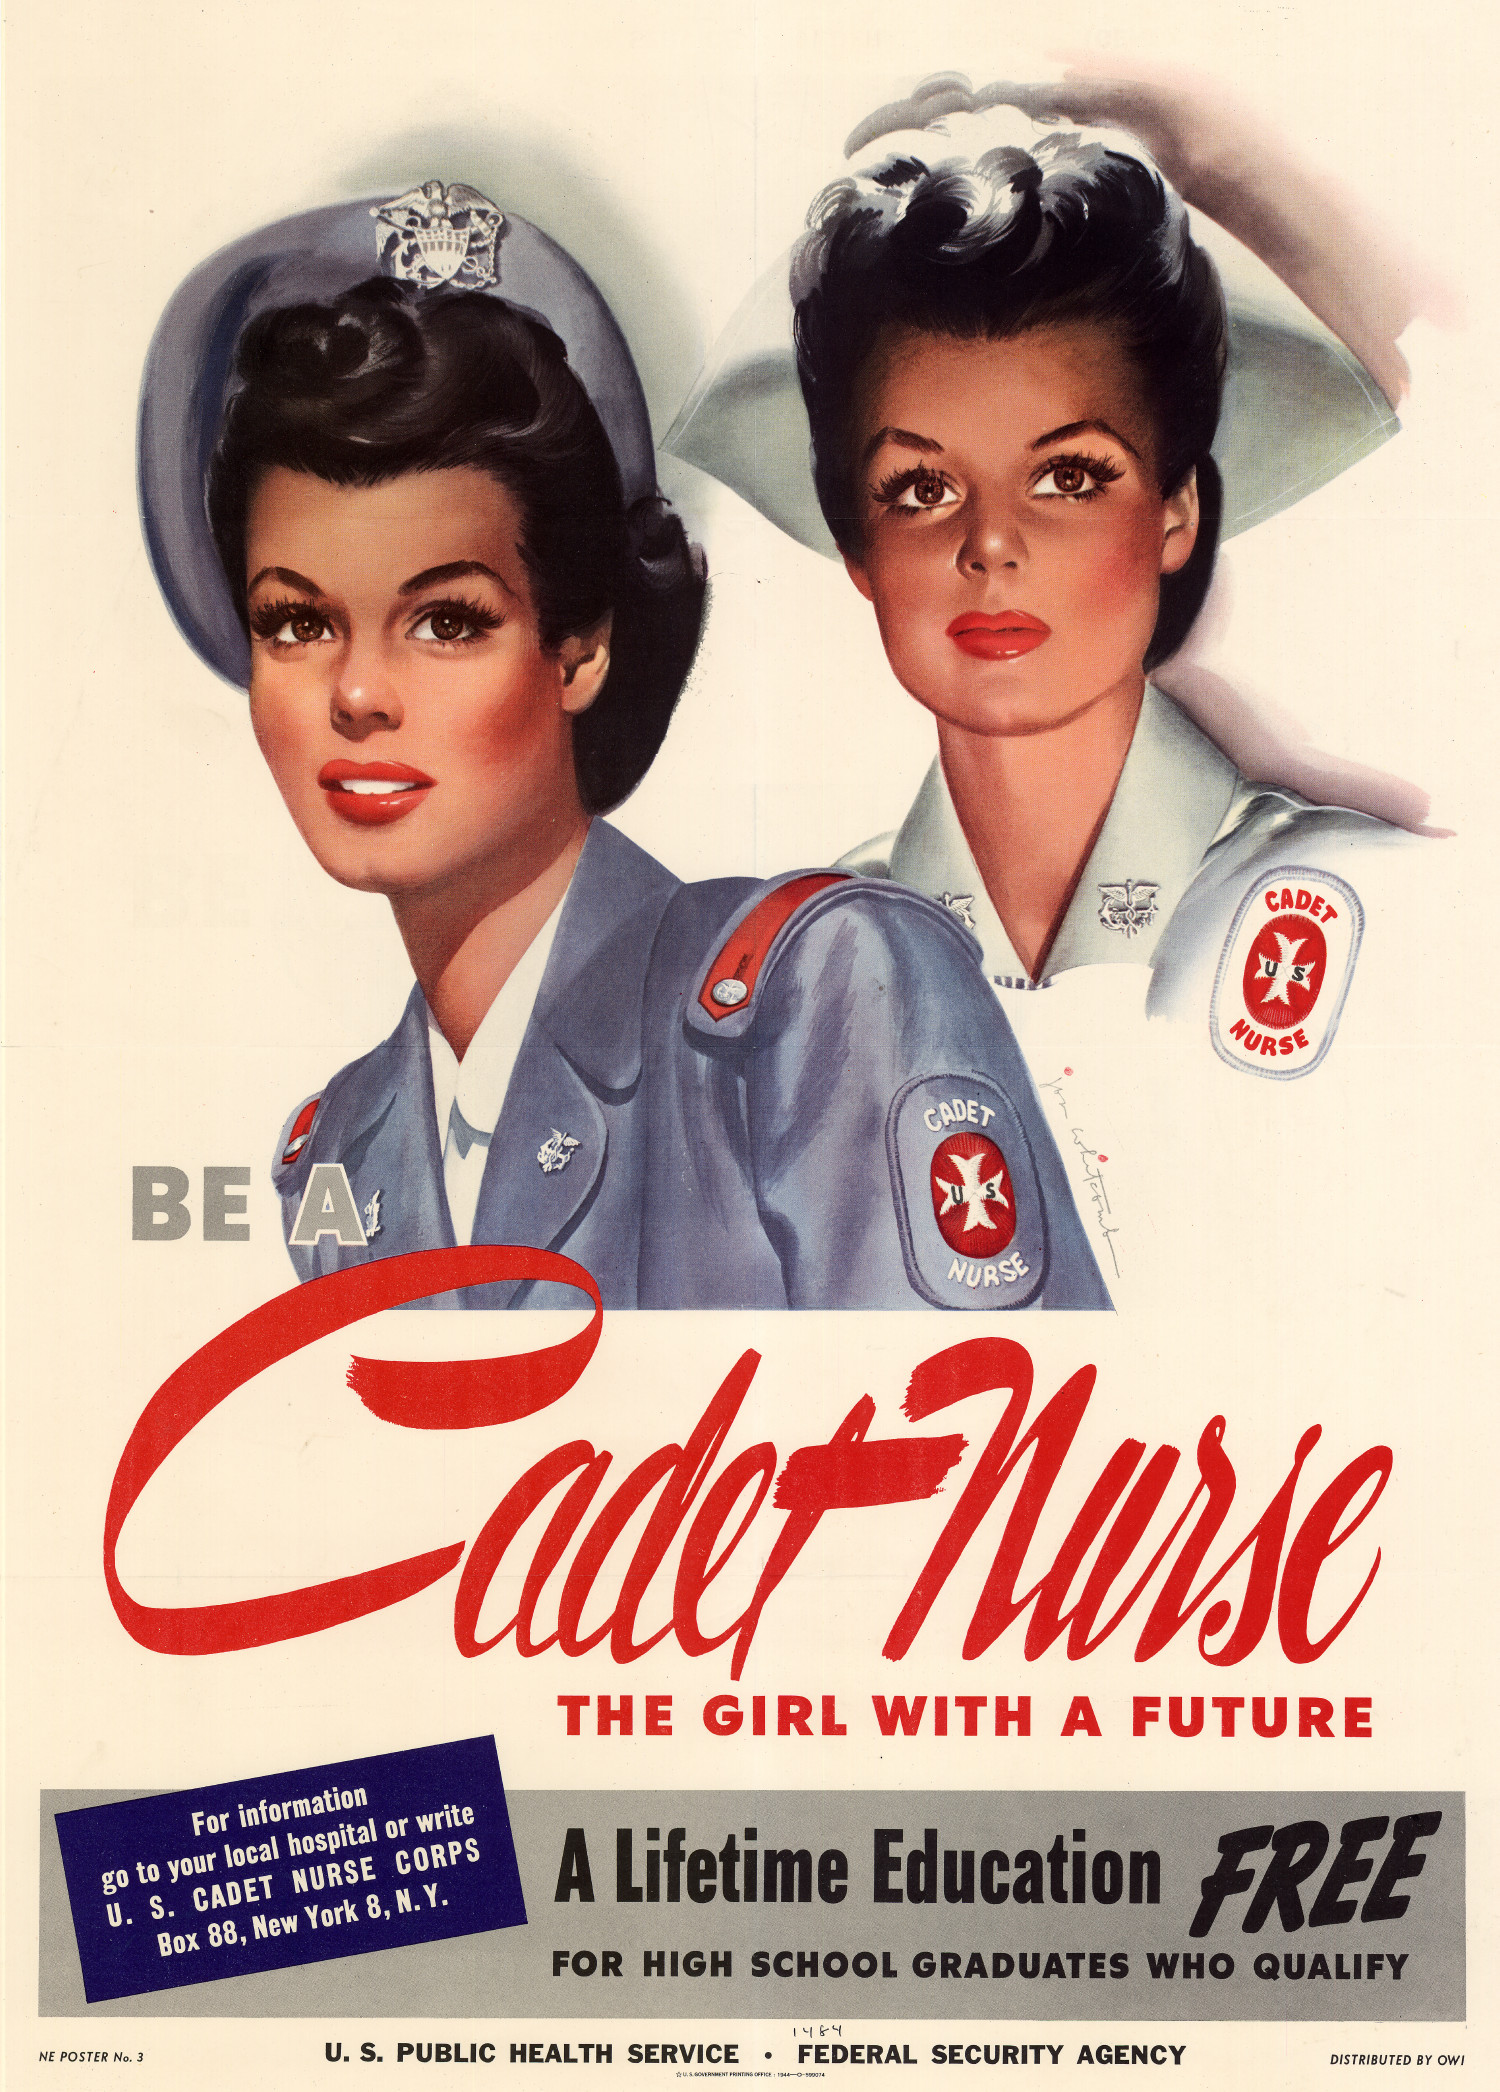 Cadet Nurse Corps (U.S. National Park Service)